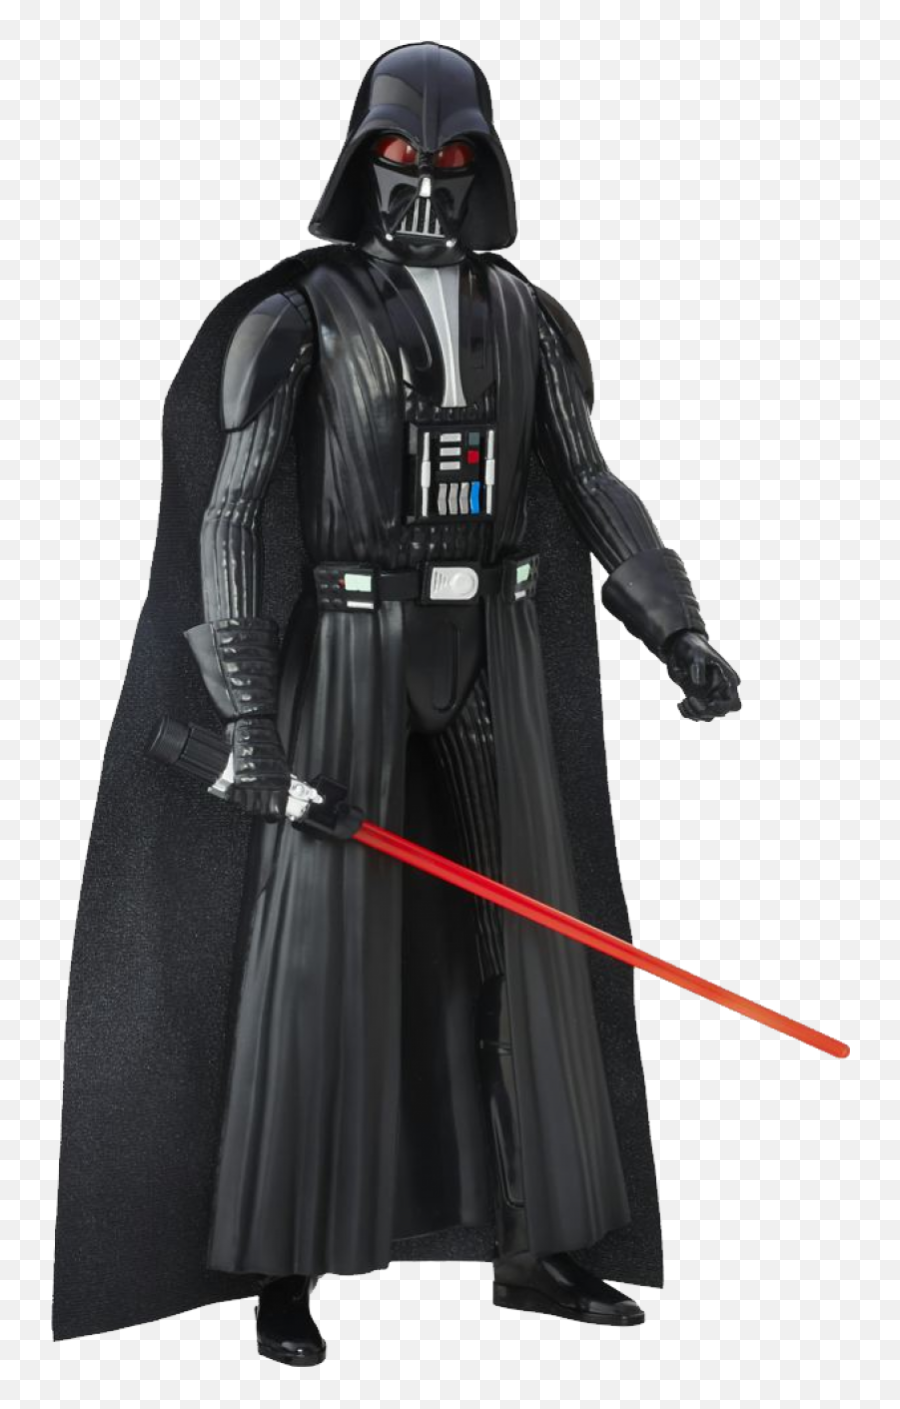 Star Wars Darth Vader Png Photo - Darth Vader Rebels Toy,Vader Png